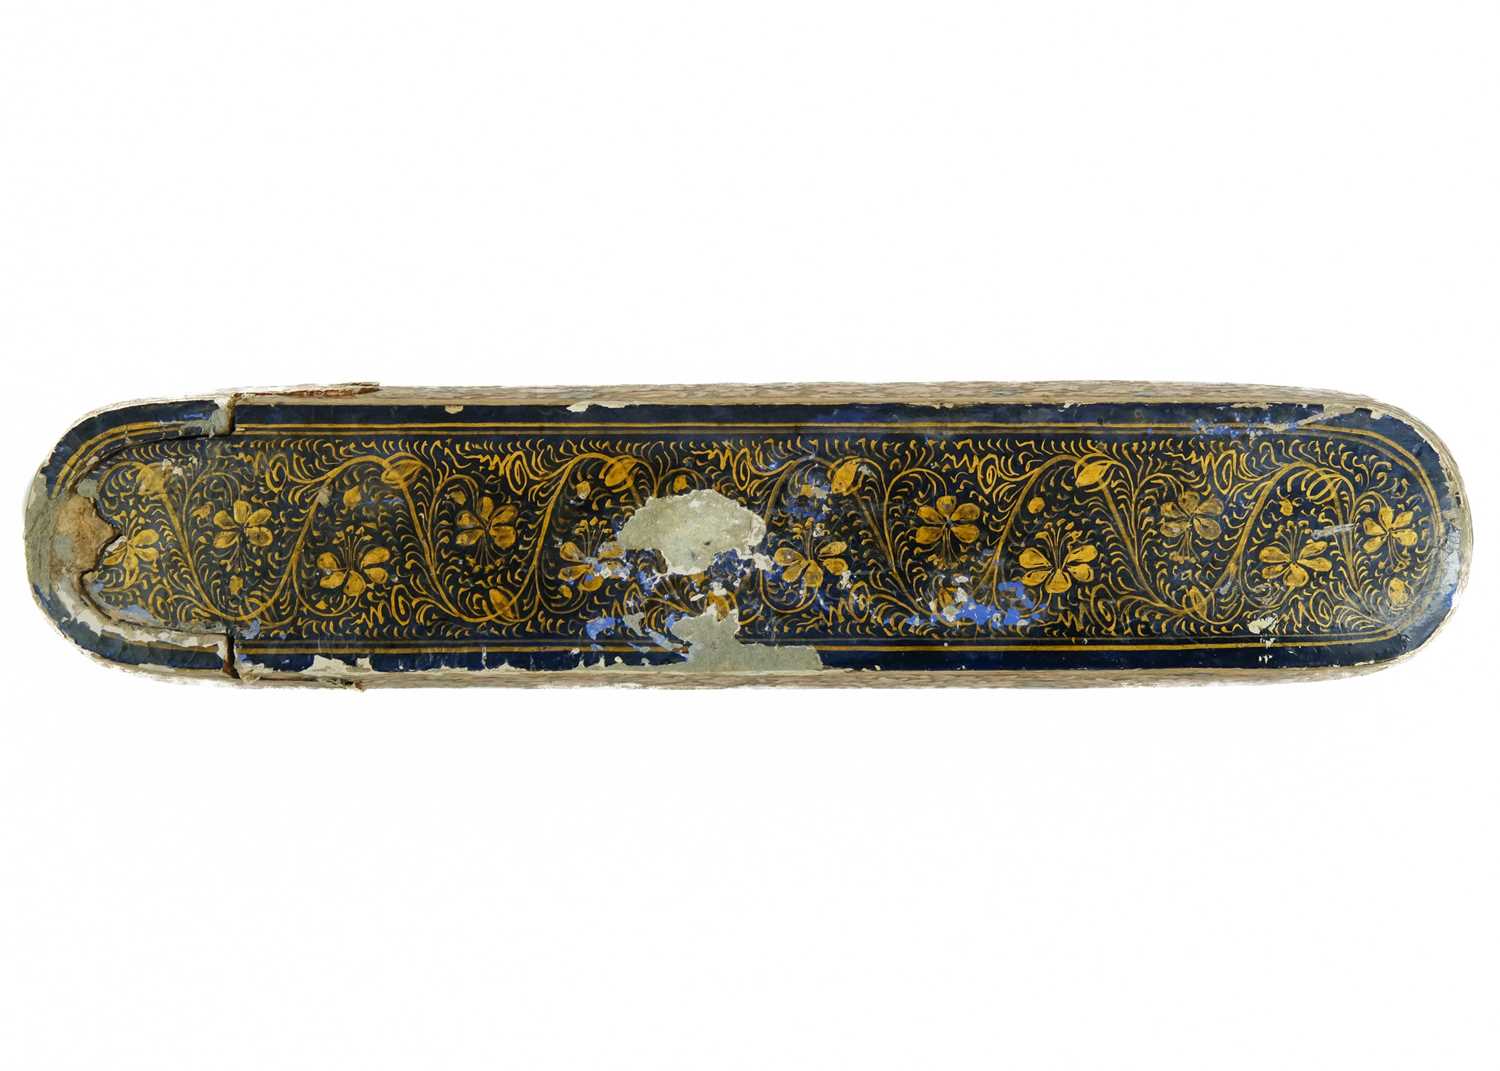 A Qajar lacquer pen box (qalamdan), Persia, 19th century. - Image 4 of 5